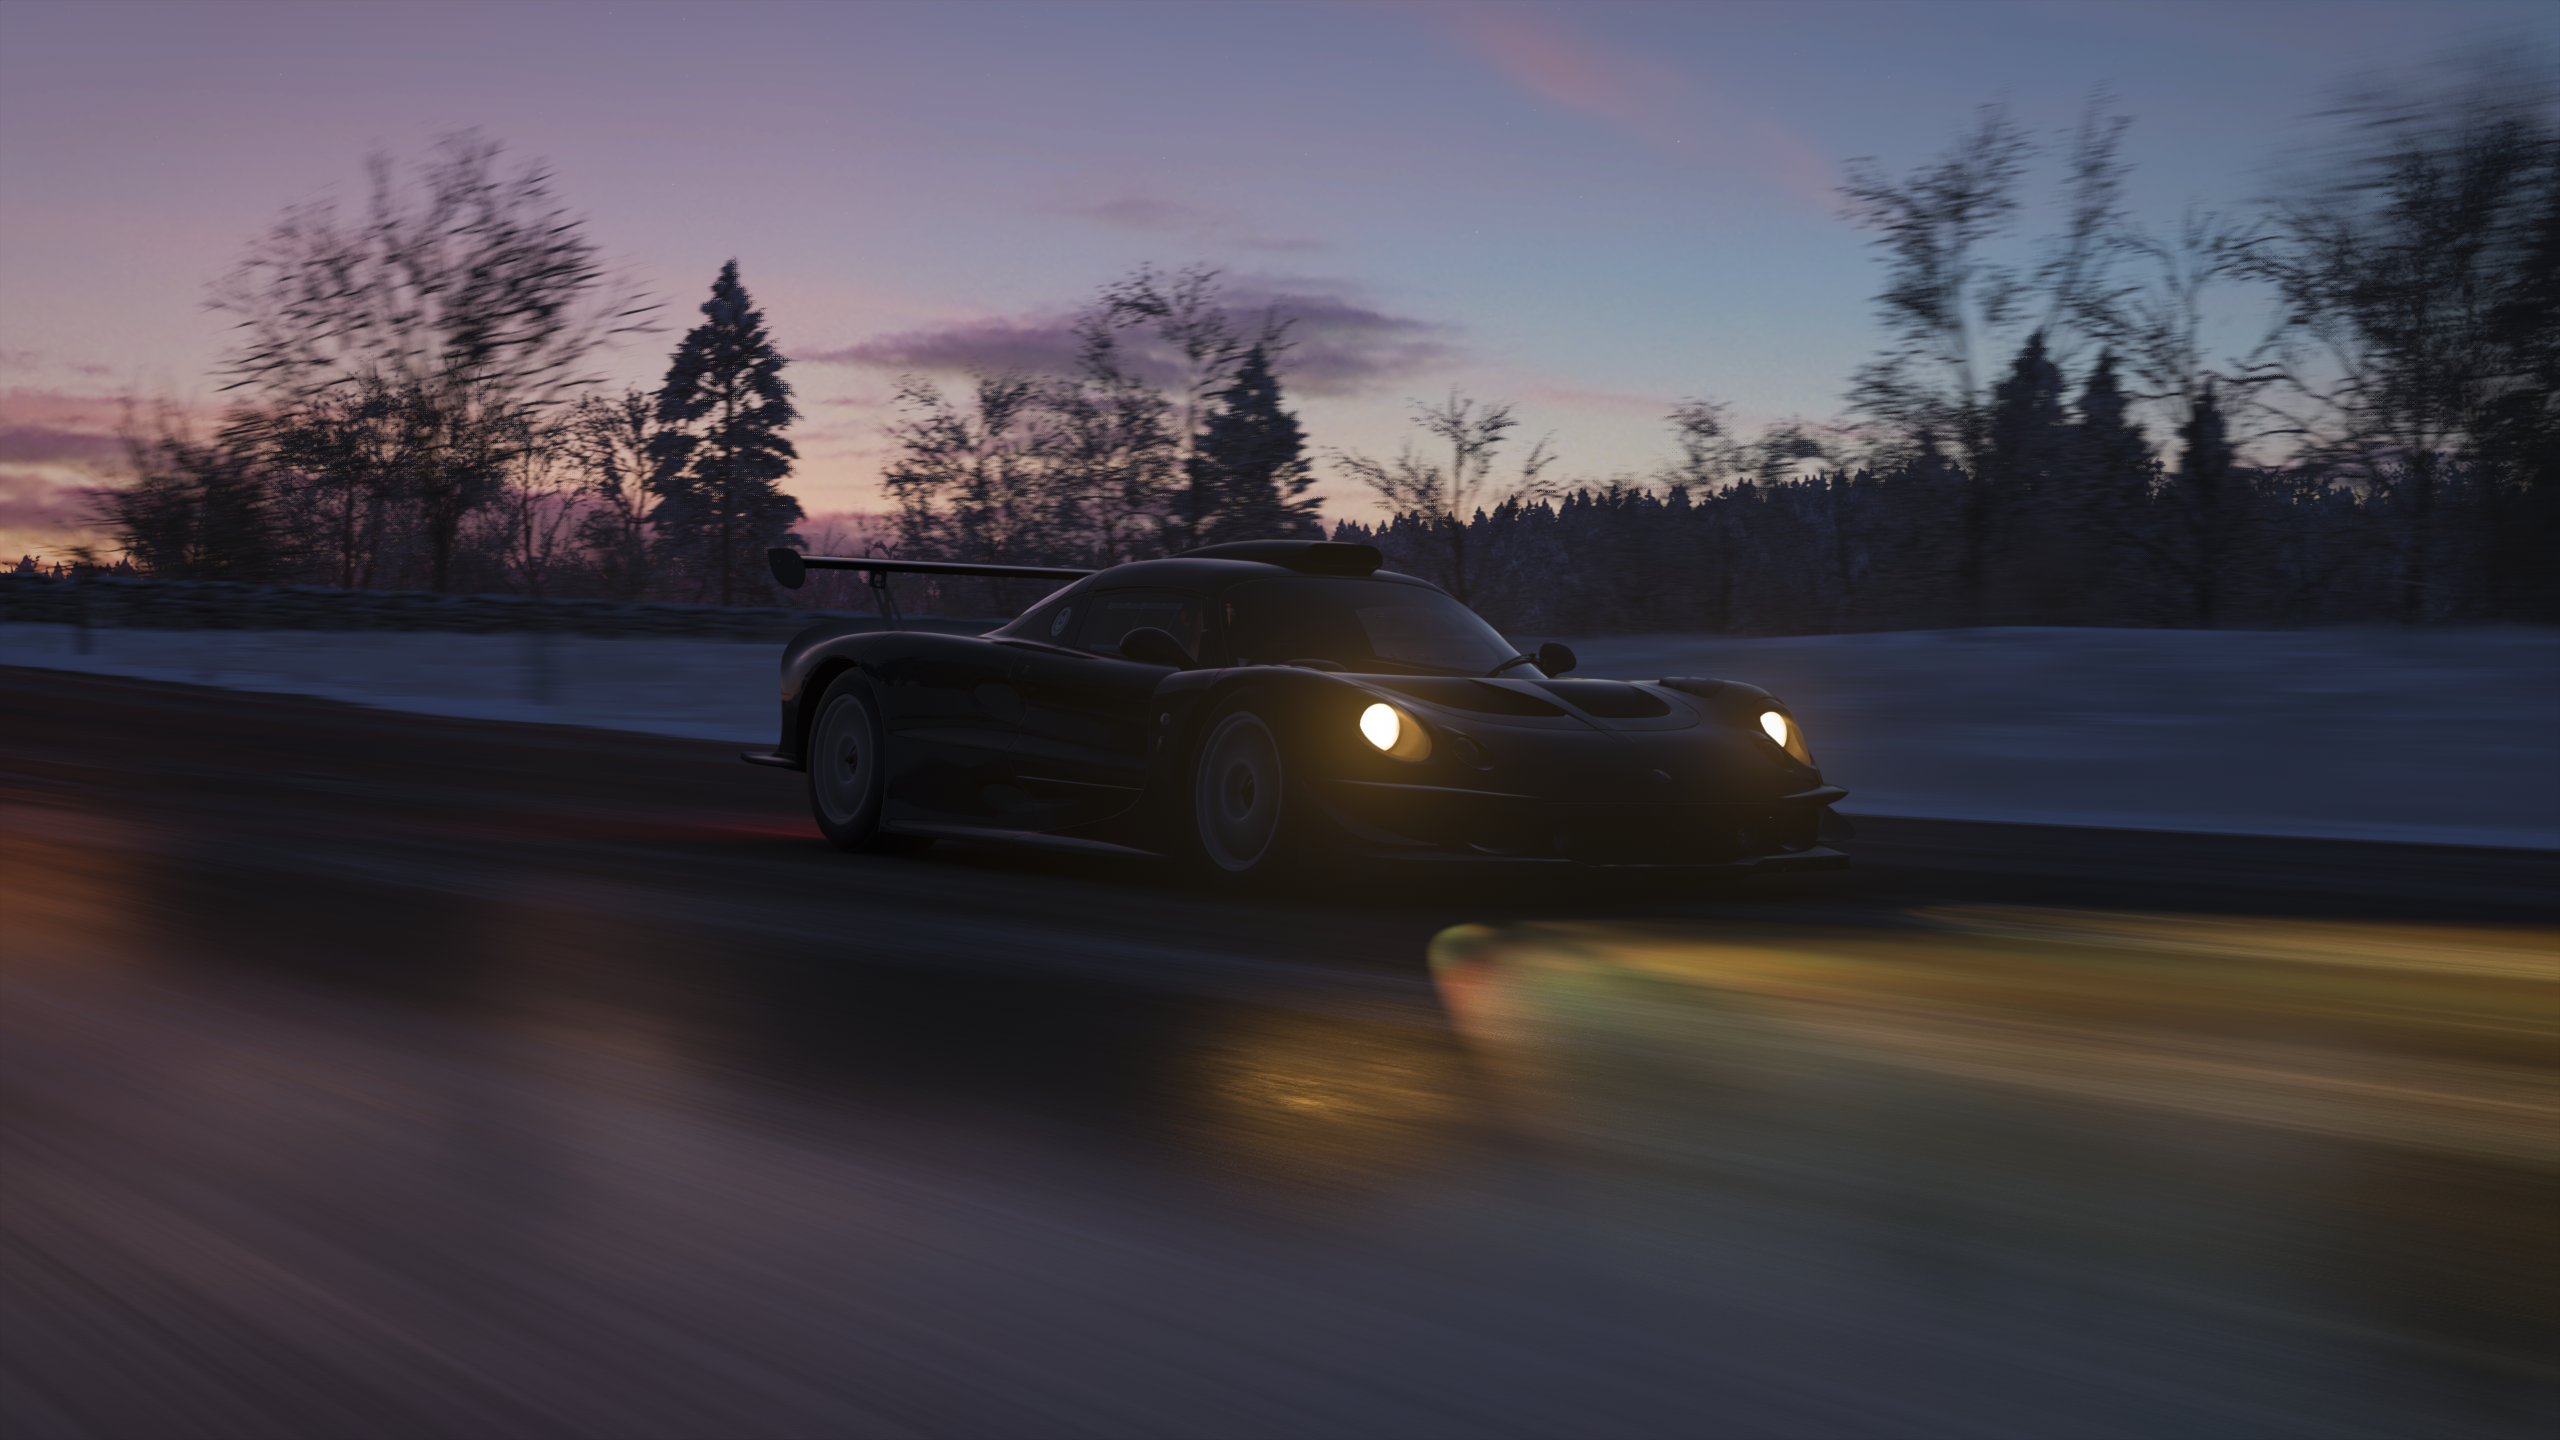 General 2560x1440 Forza Horizon 4 car dark racing vehicle video games screen shot